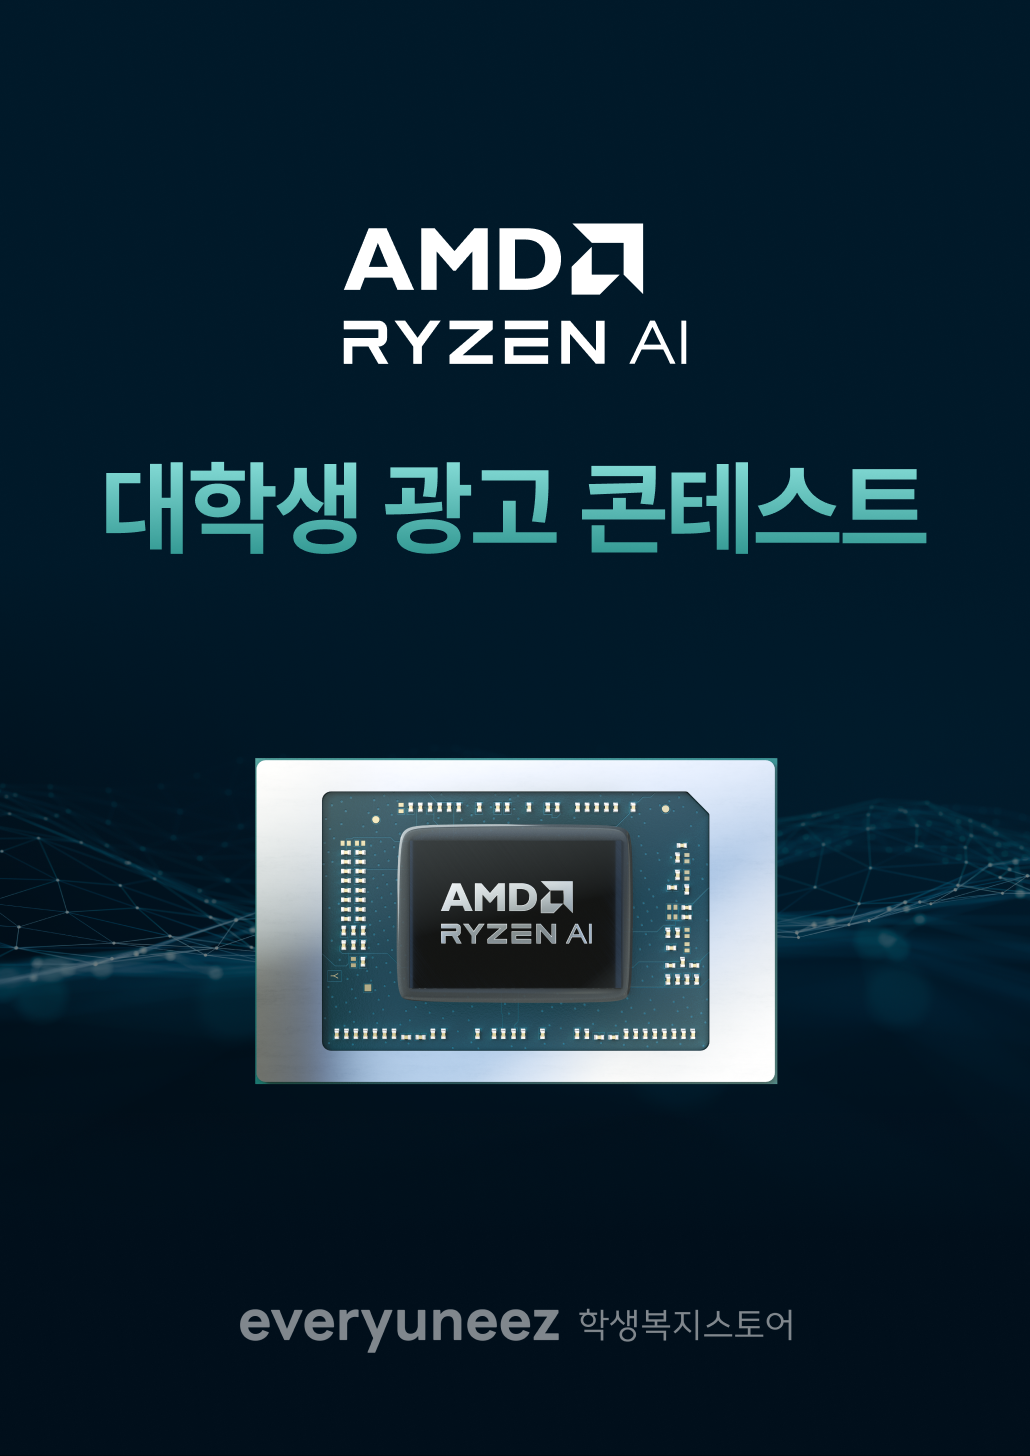 AMD RYZEN AI™ 광고 콘테스트